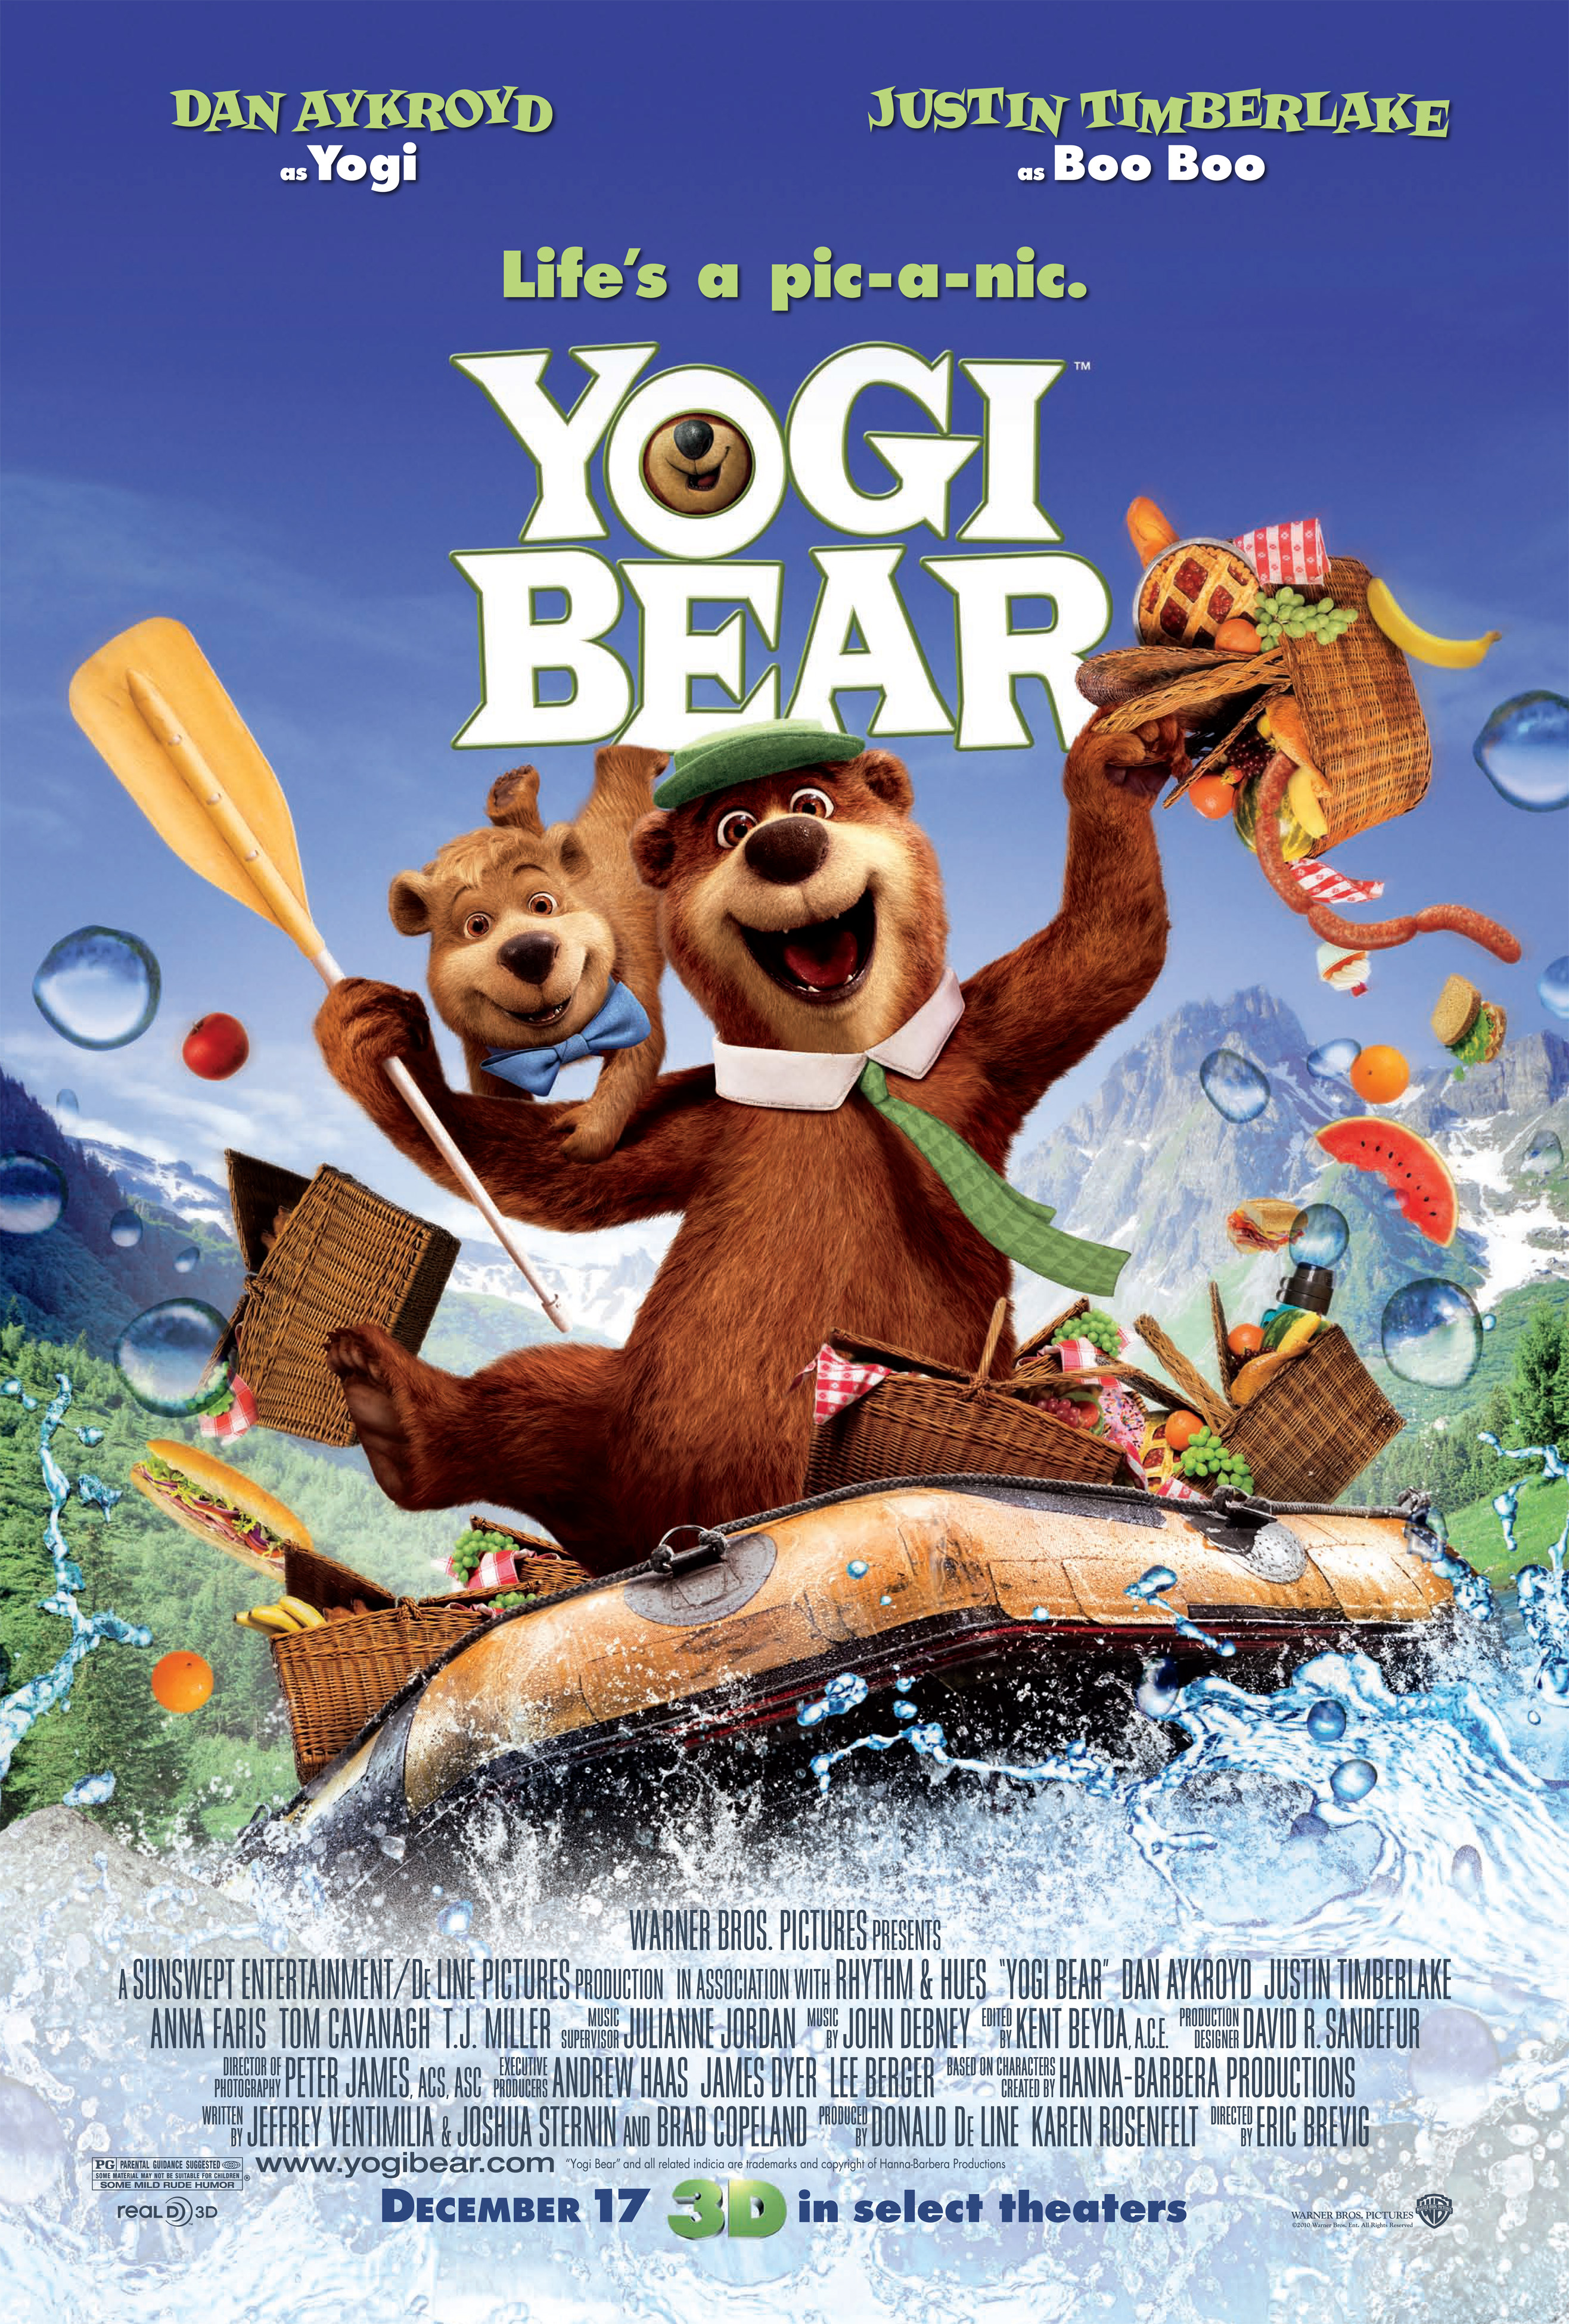 Yogi-Bear-movie-poster-1.jpg